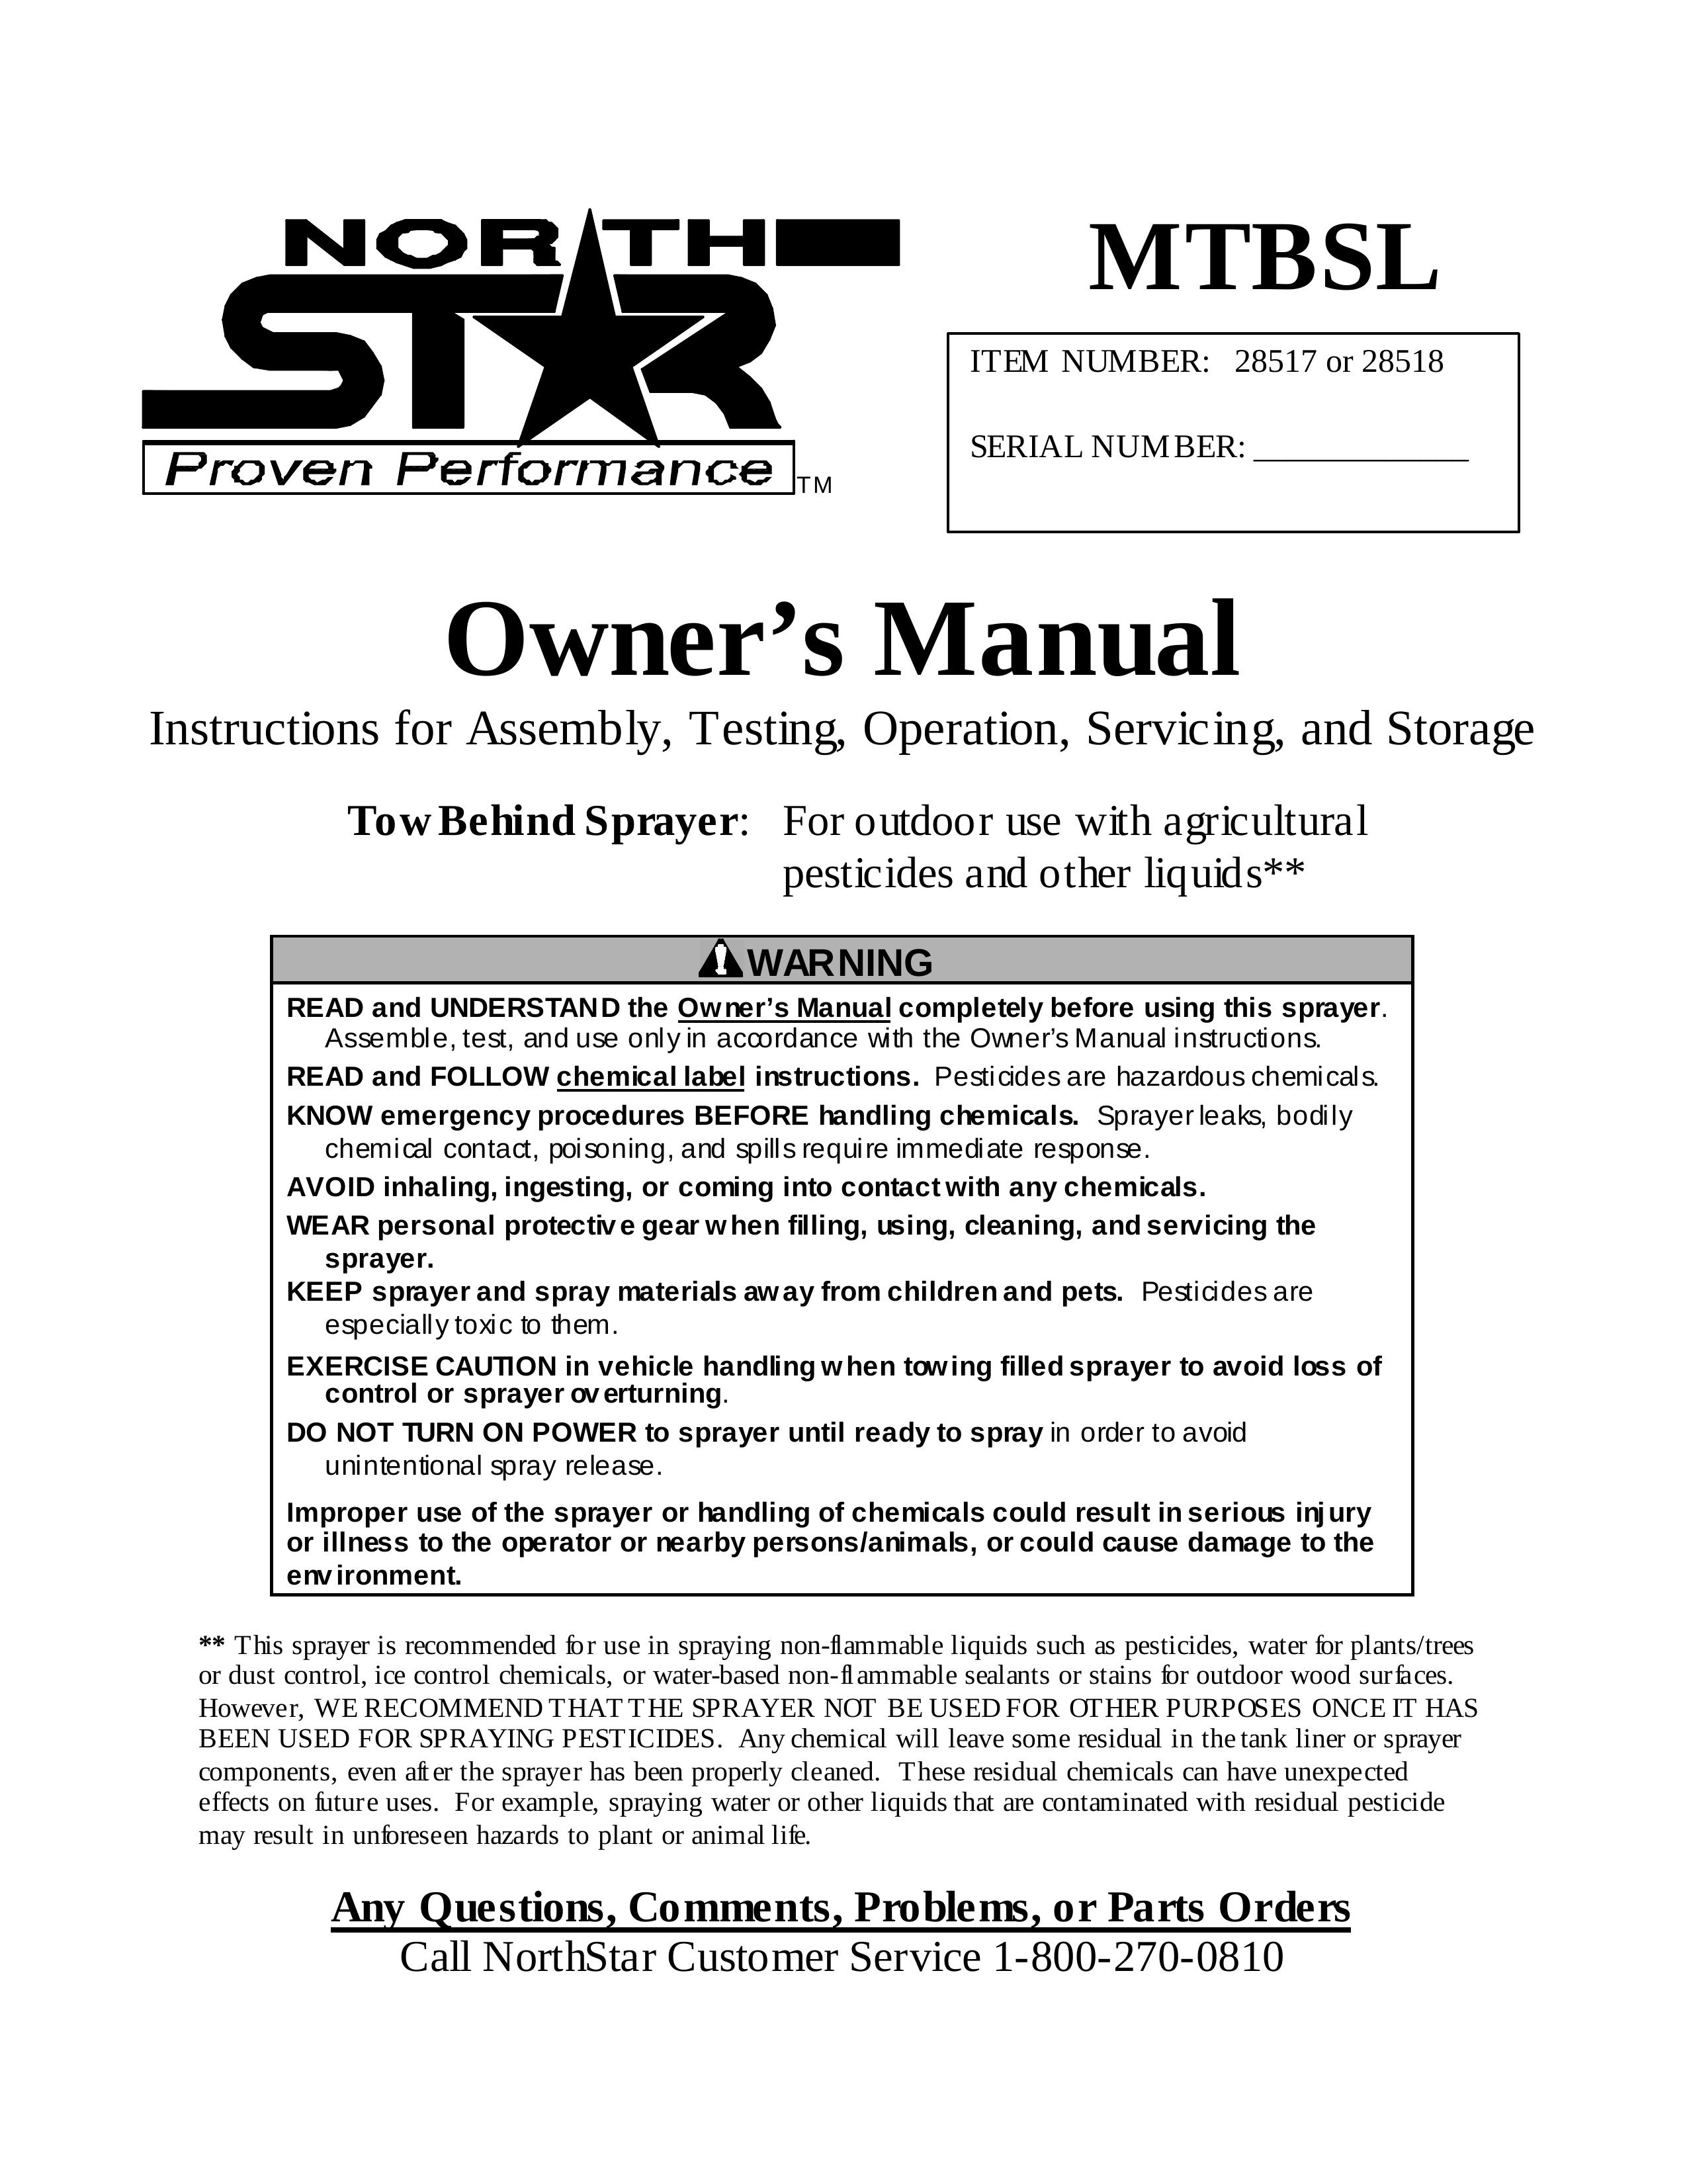 North Star MTBSL Pest Control Equipment User Manual